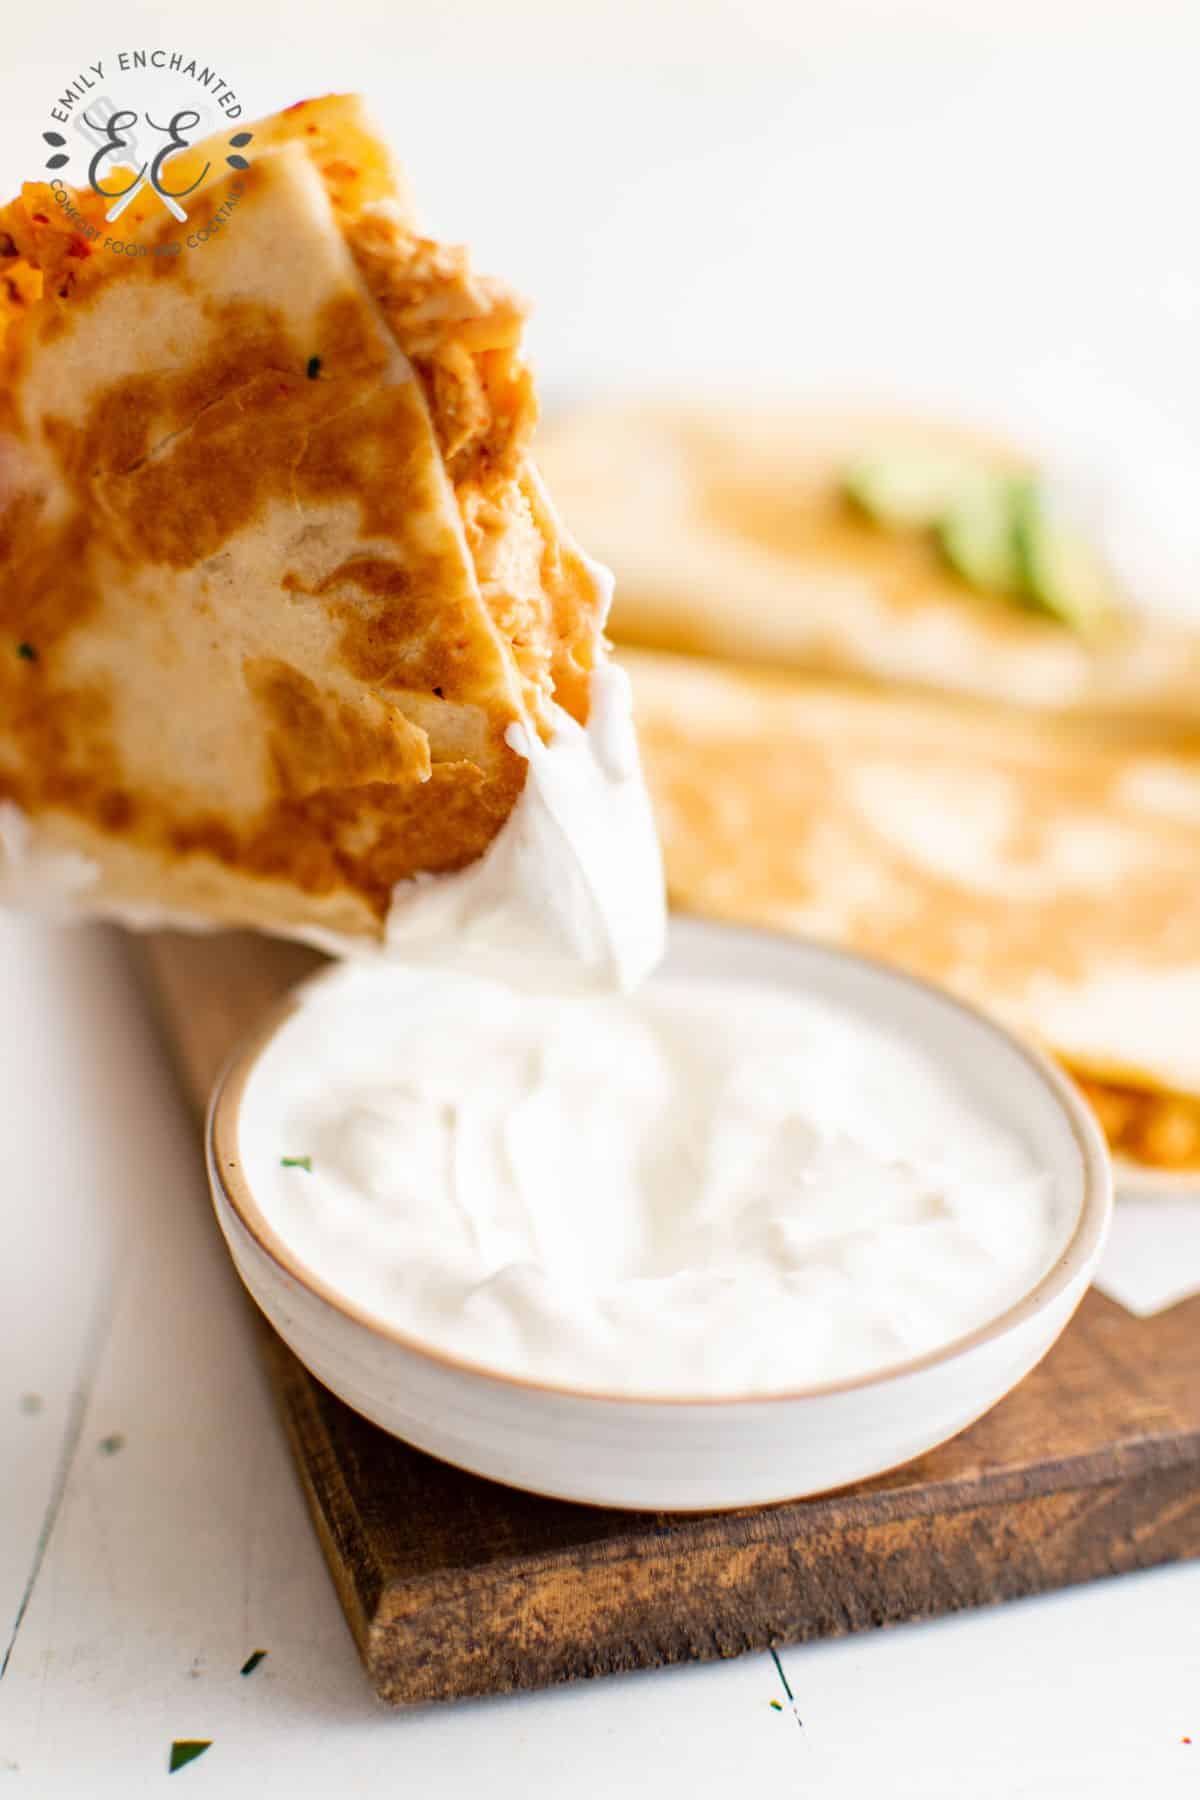 Chipotle Chicken Quesadilla dipped in Sour Cream